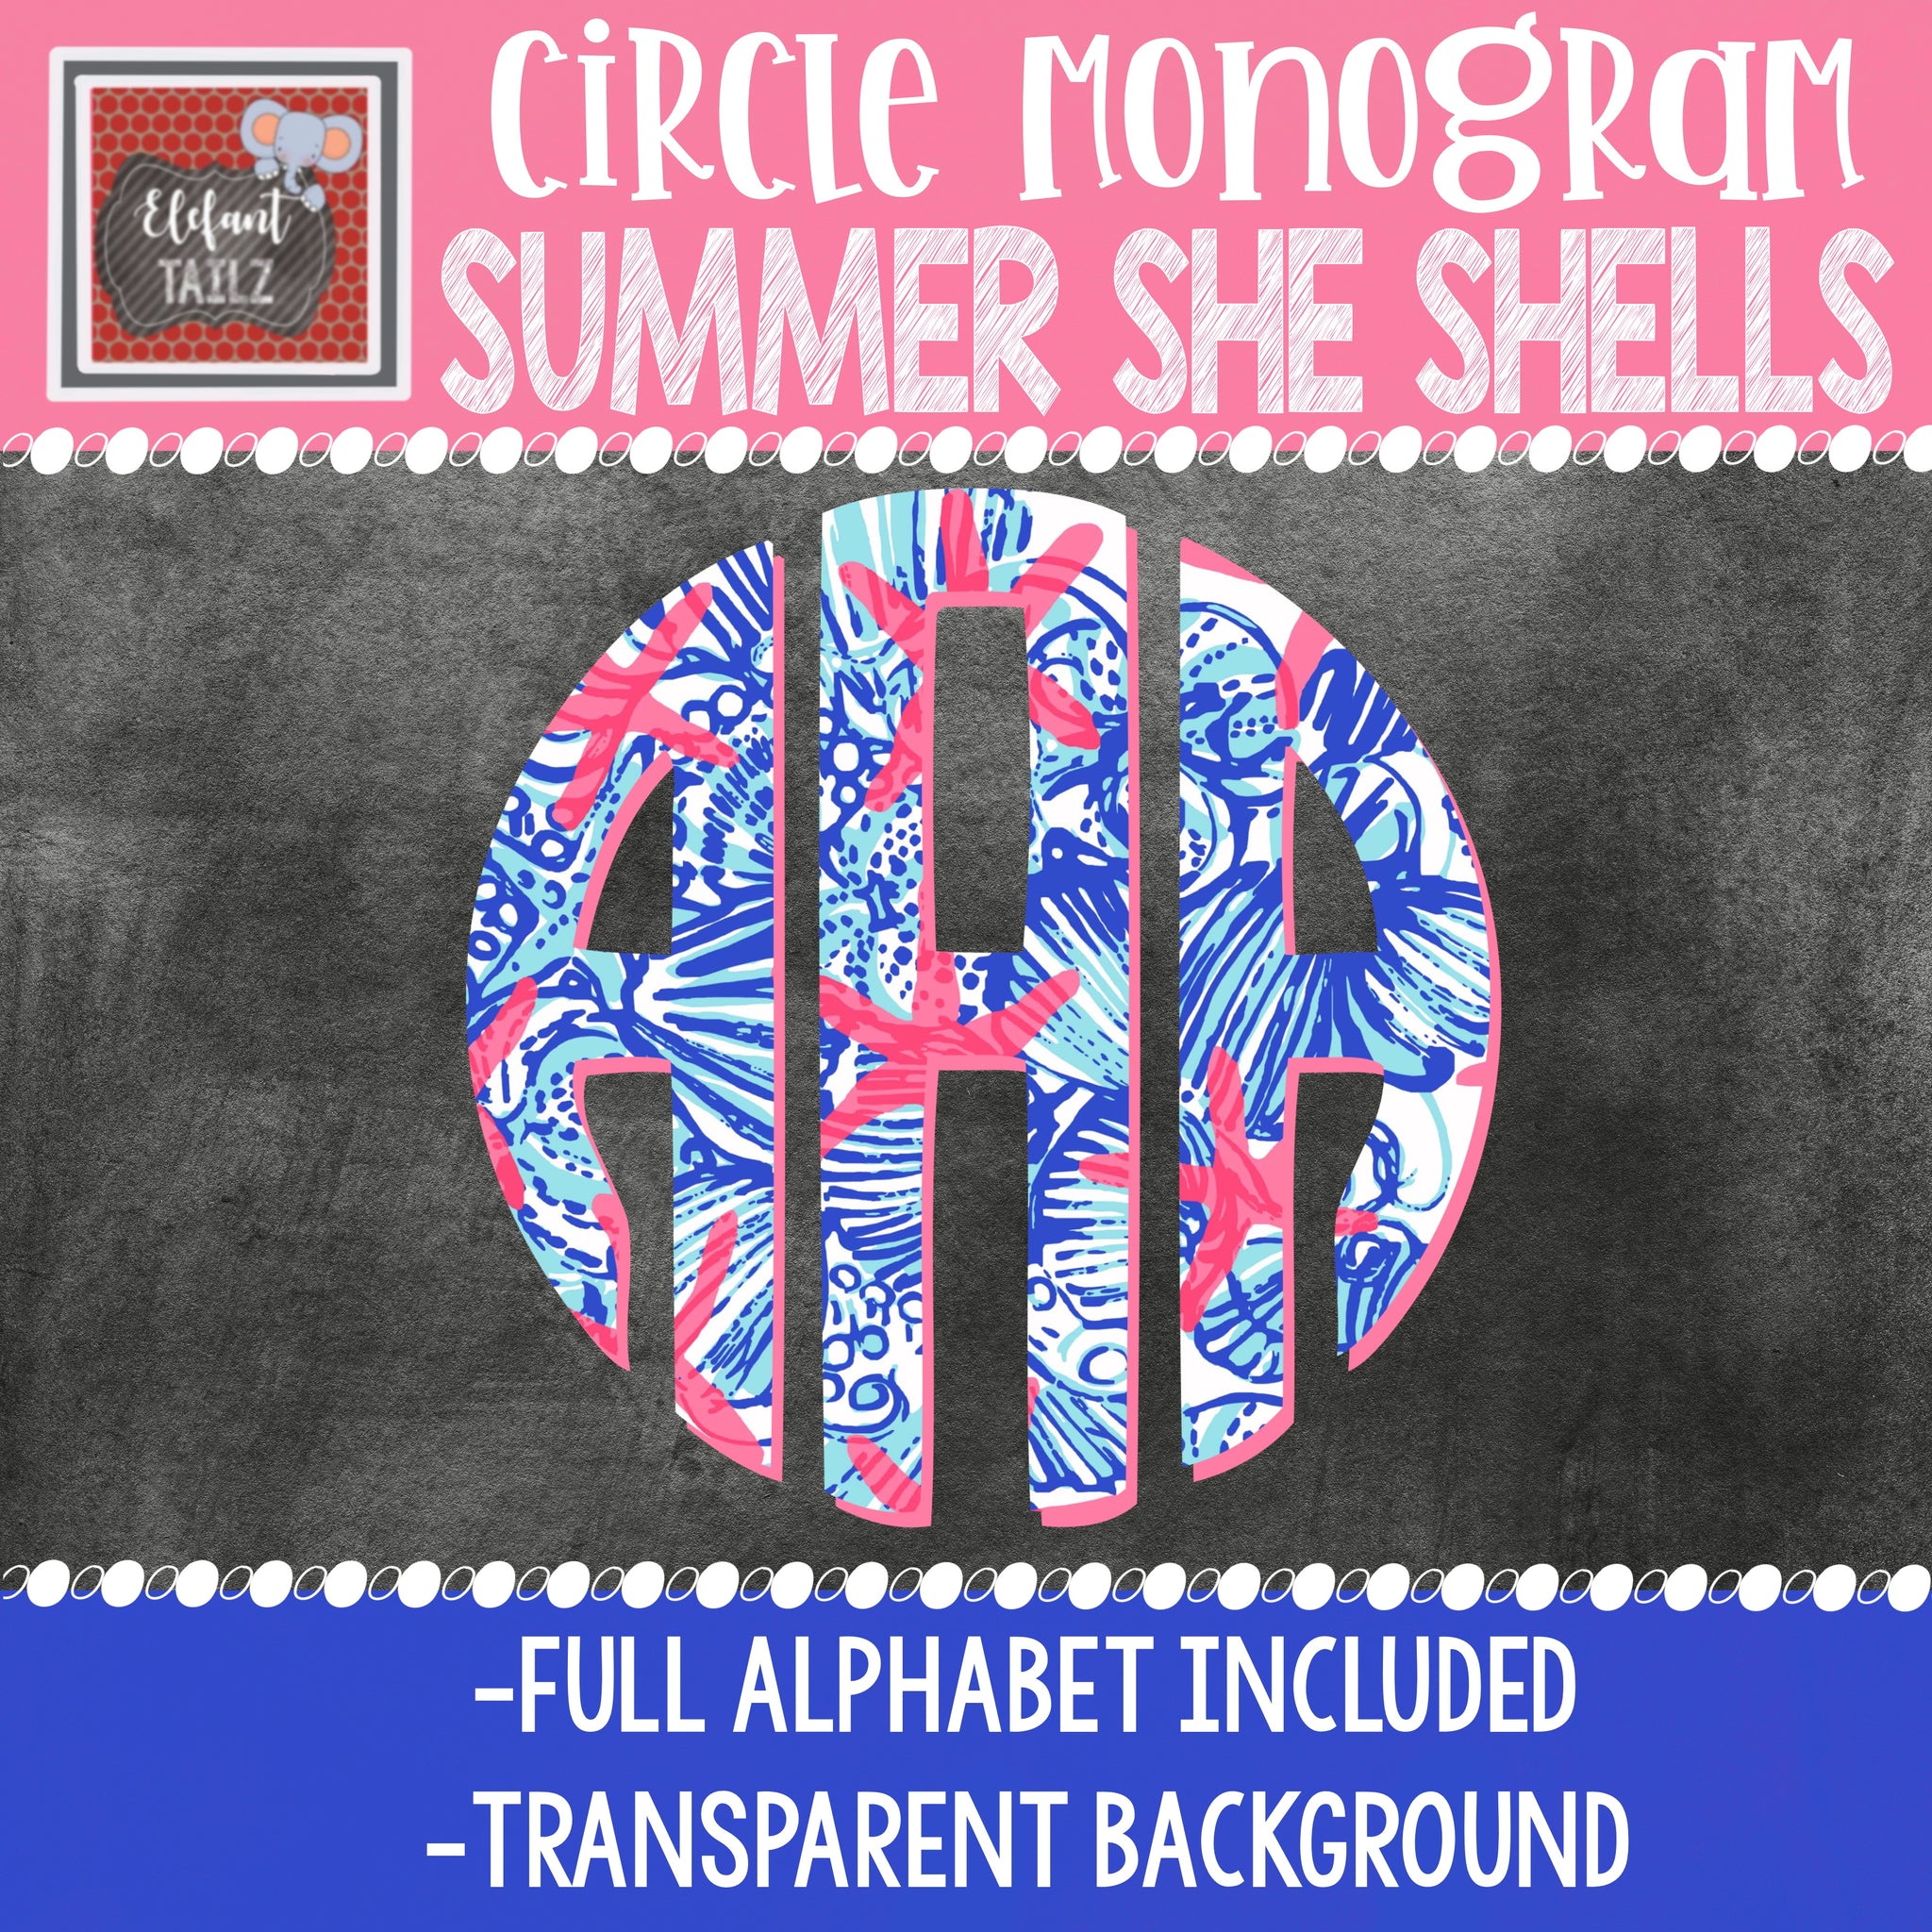 Lilly Pulitzer Summer She Shells Circle Monogram